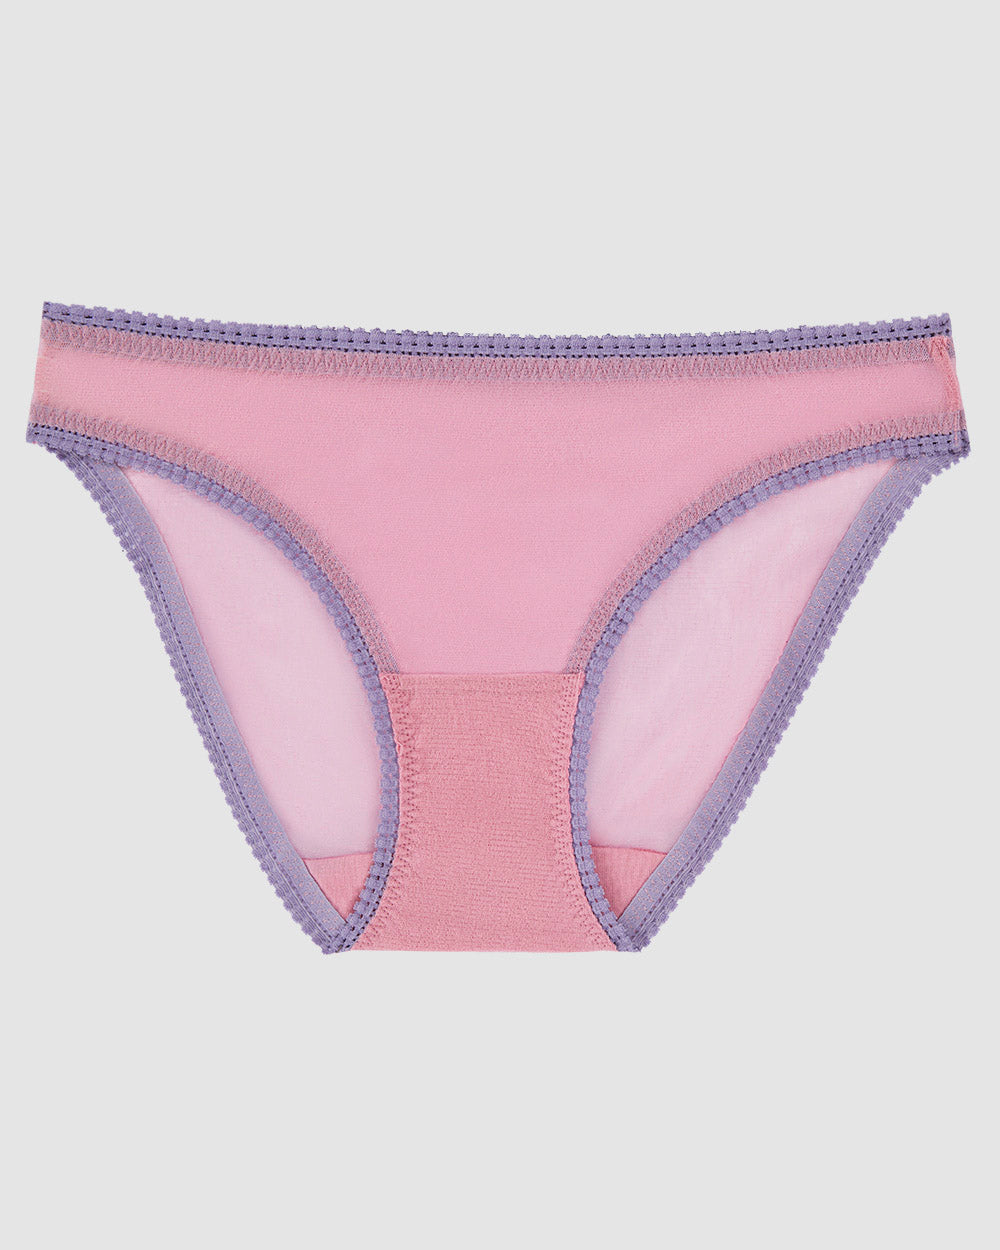 A confetti Gossamer Mesh Hip Bikini Underwear